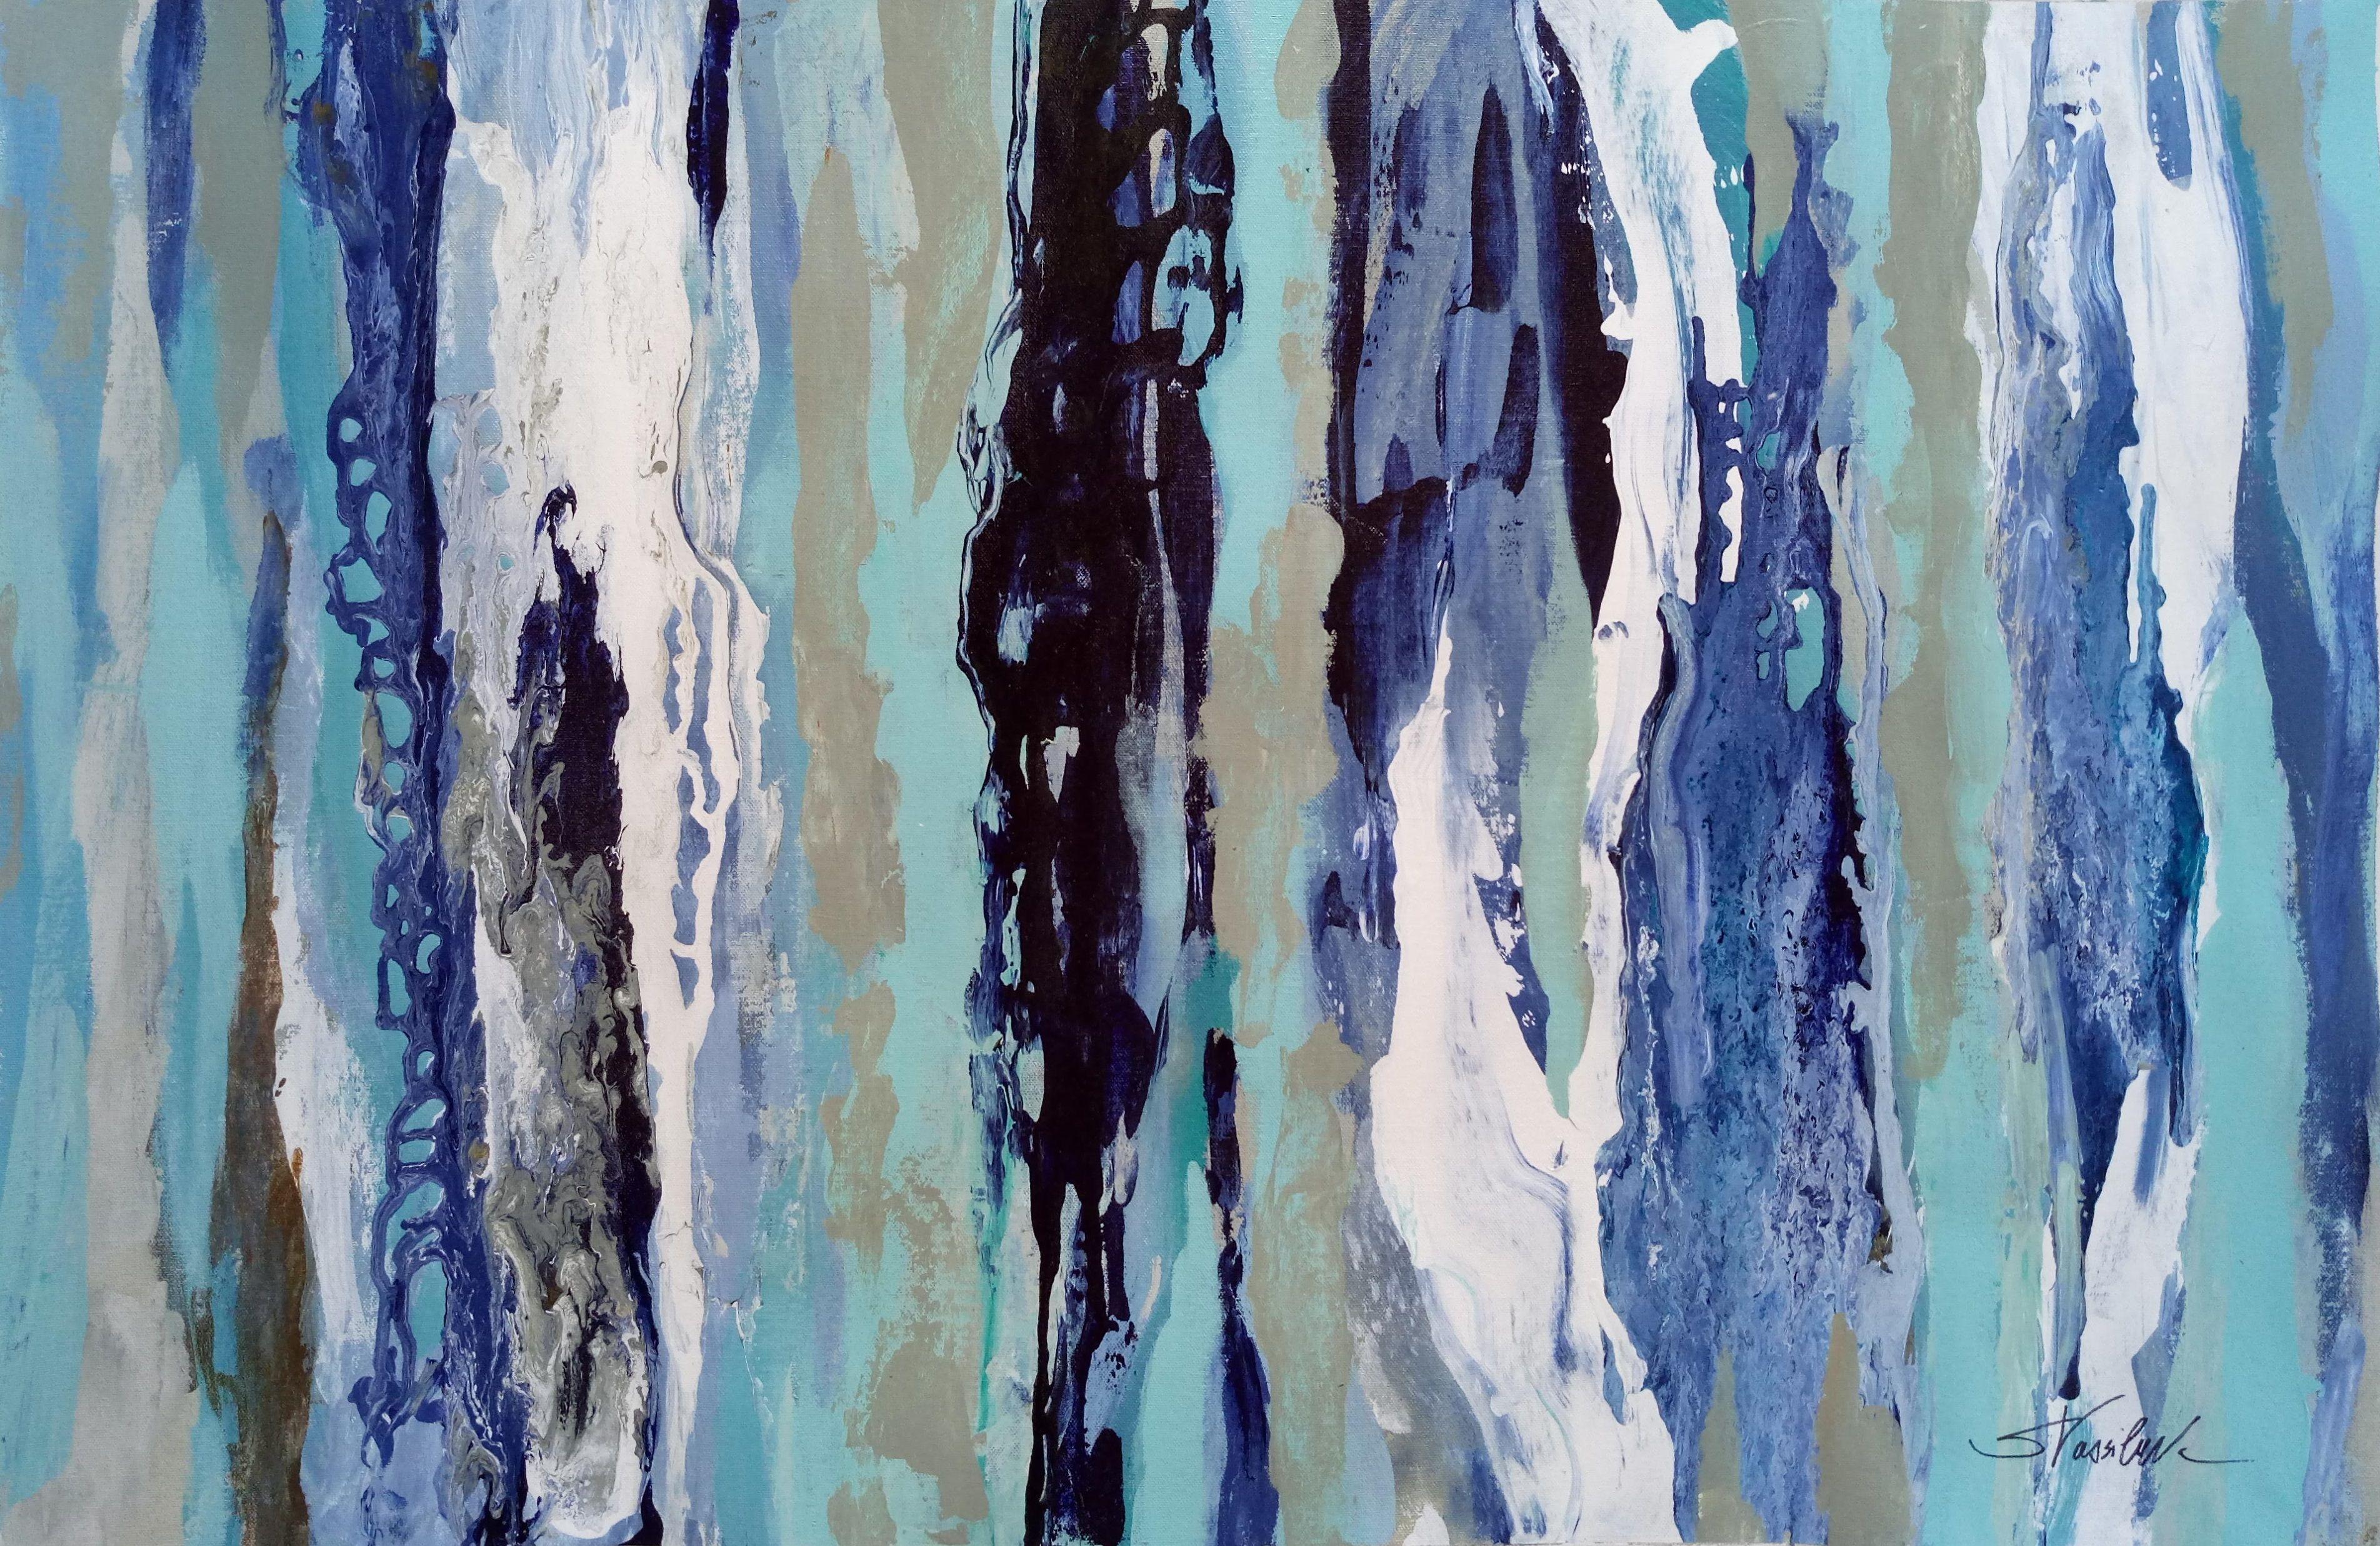 silvia vassileva Abstract Painting - Sea Foam, Painting, Acrylic on Canvas